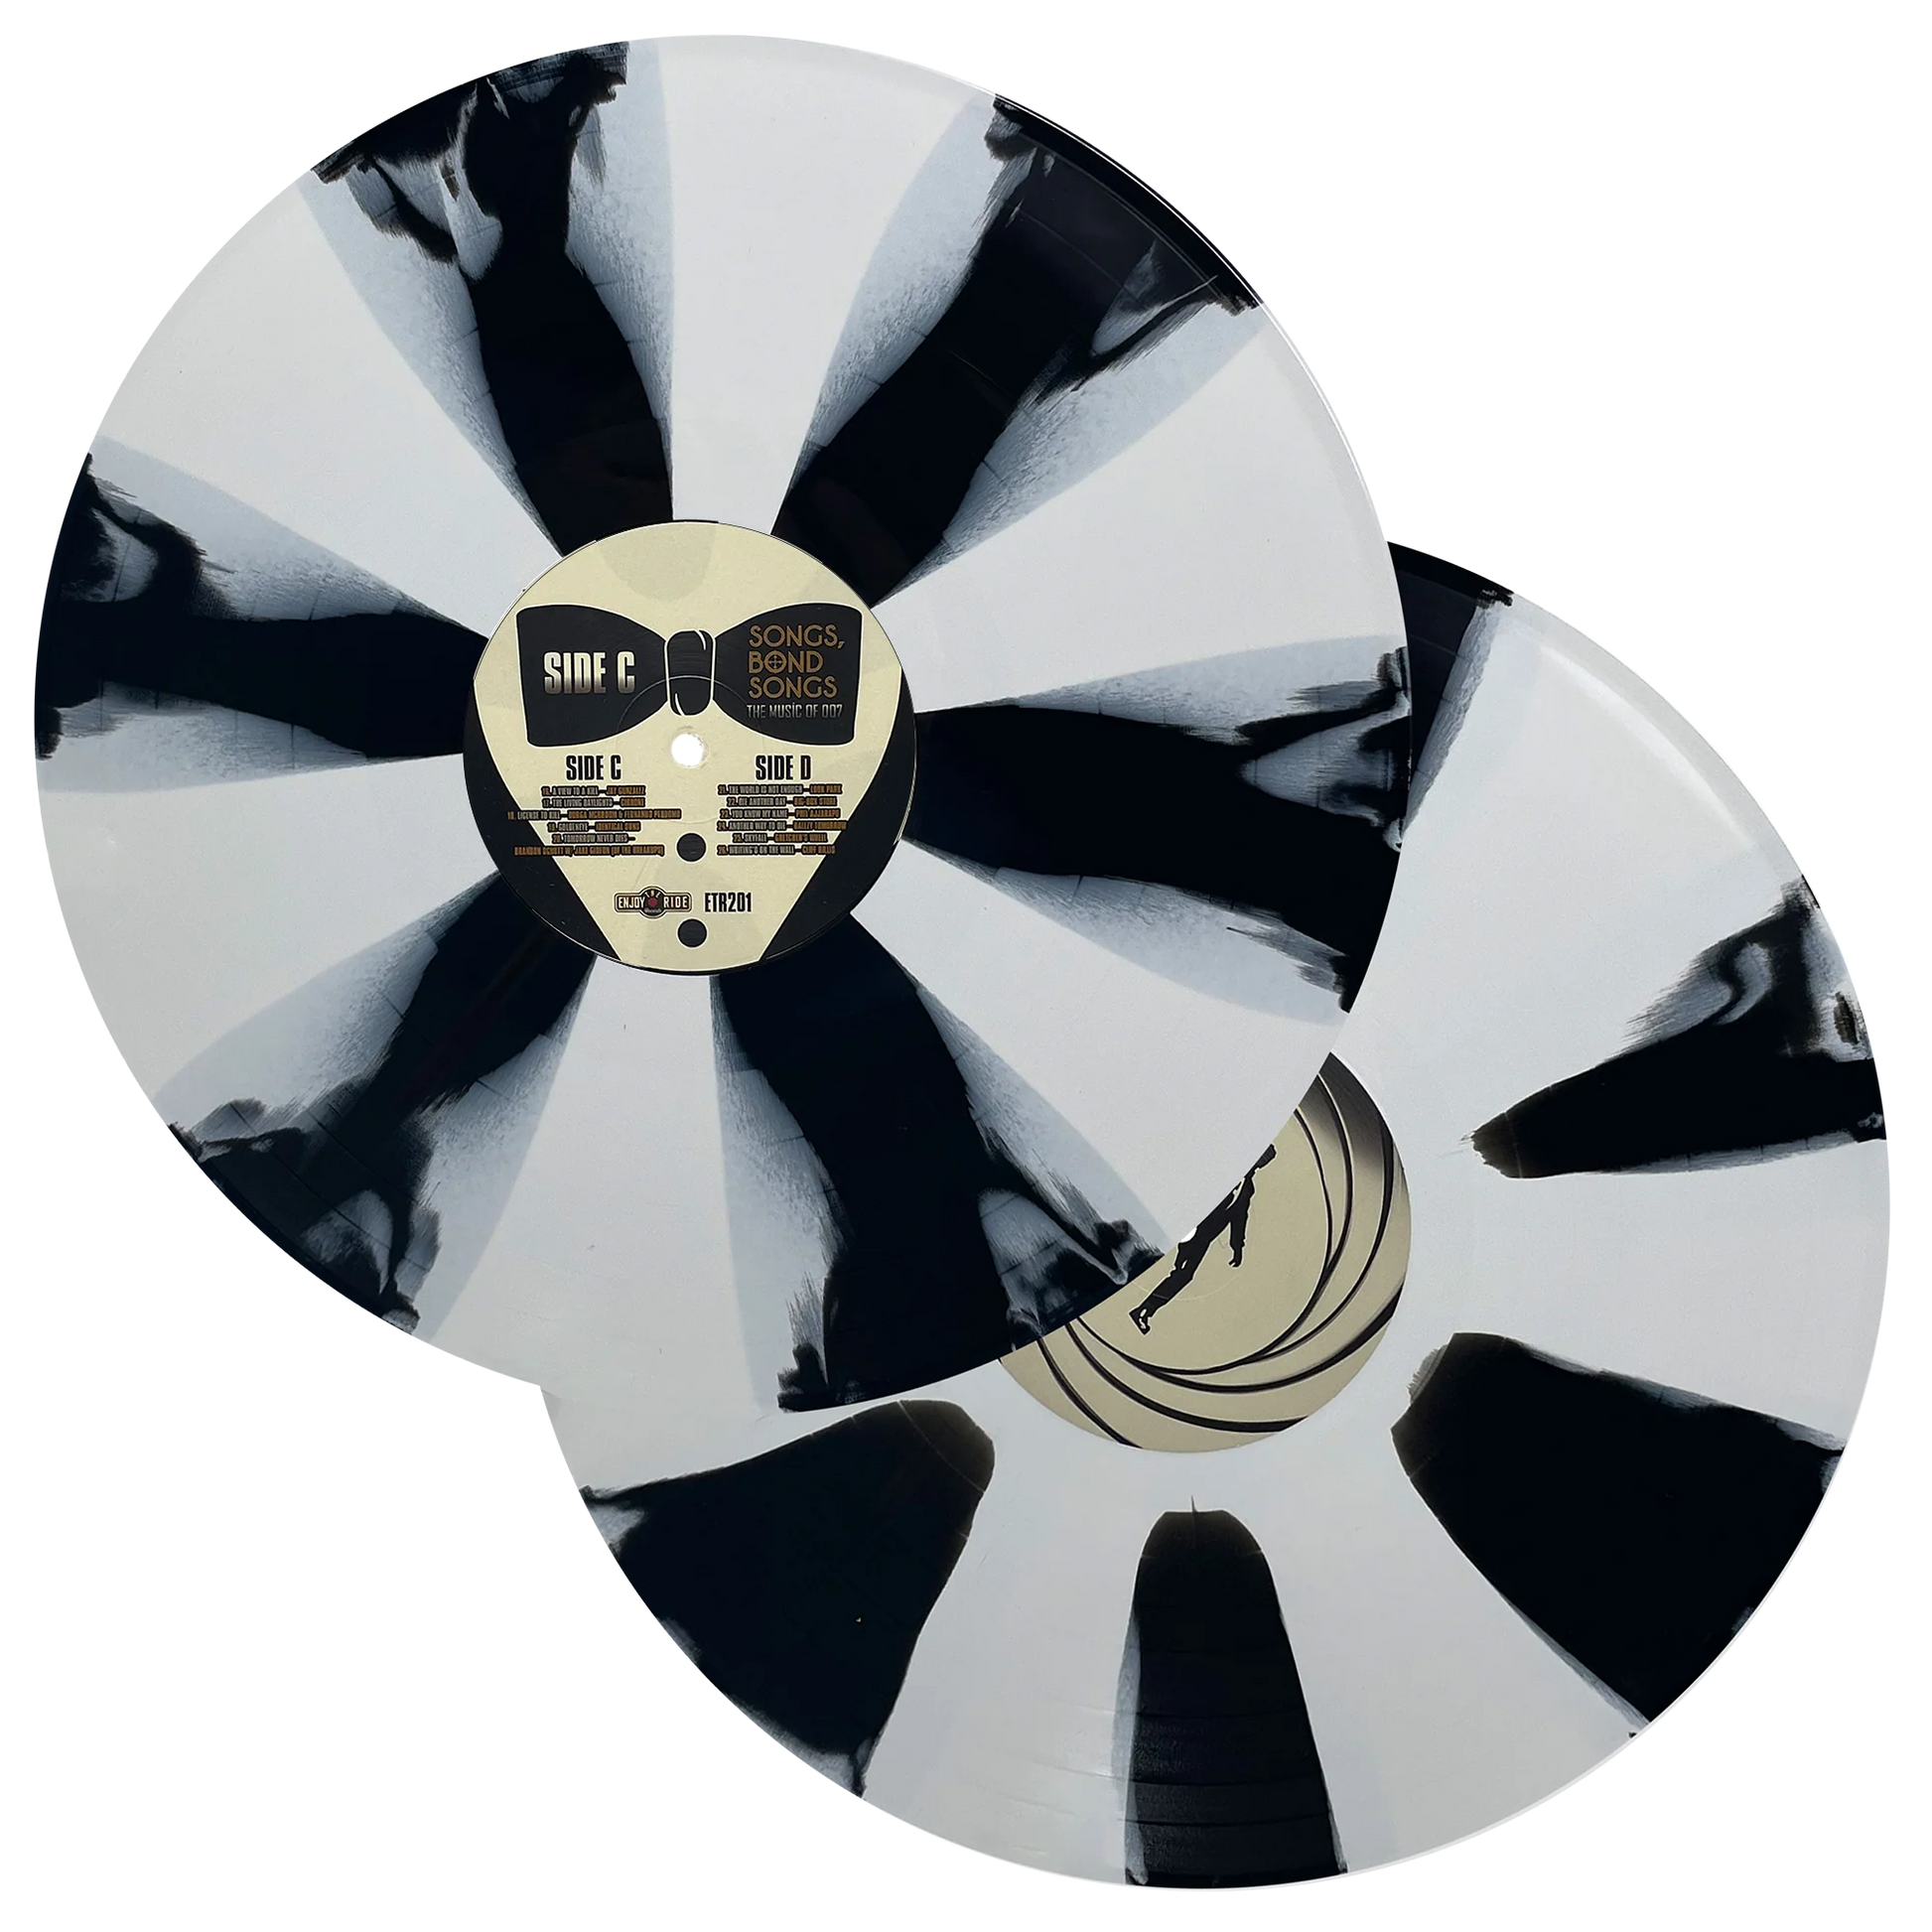 Songs. Bond Songs: The Music of 007 (Exclusive Tuxedo Pinwheel Vinyl 2LP)